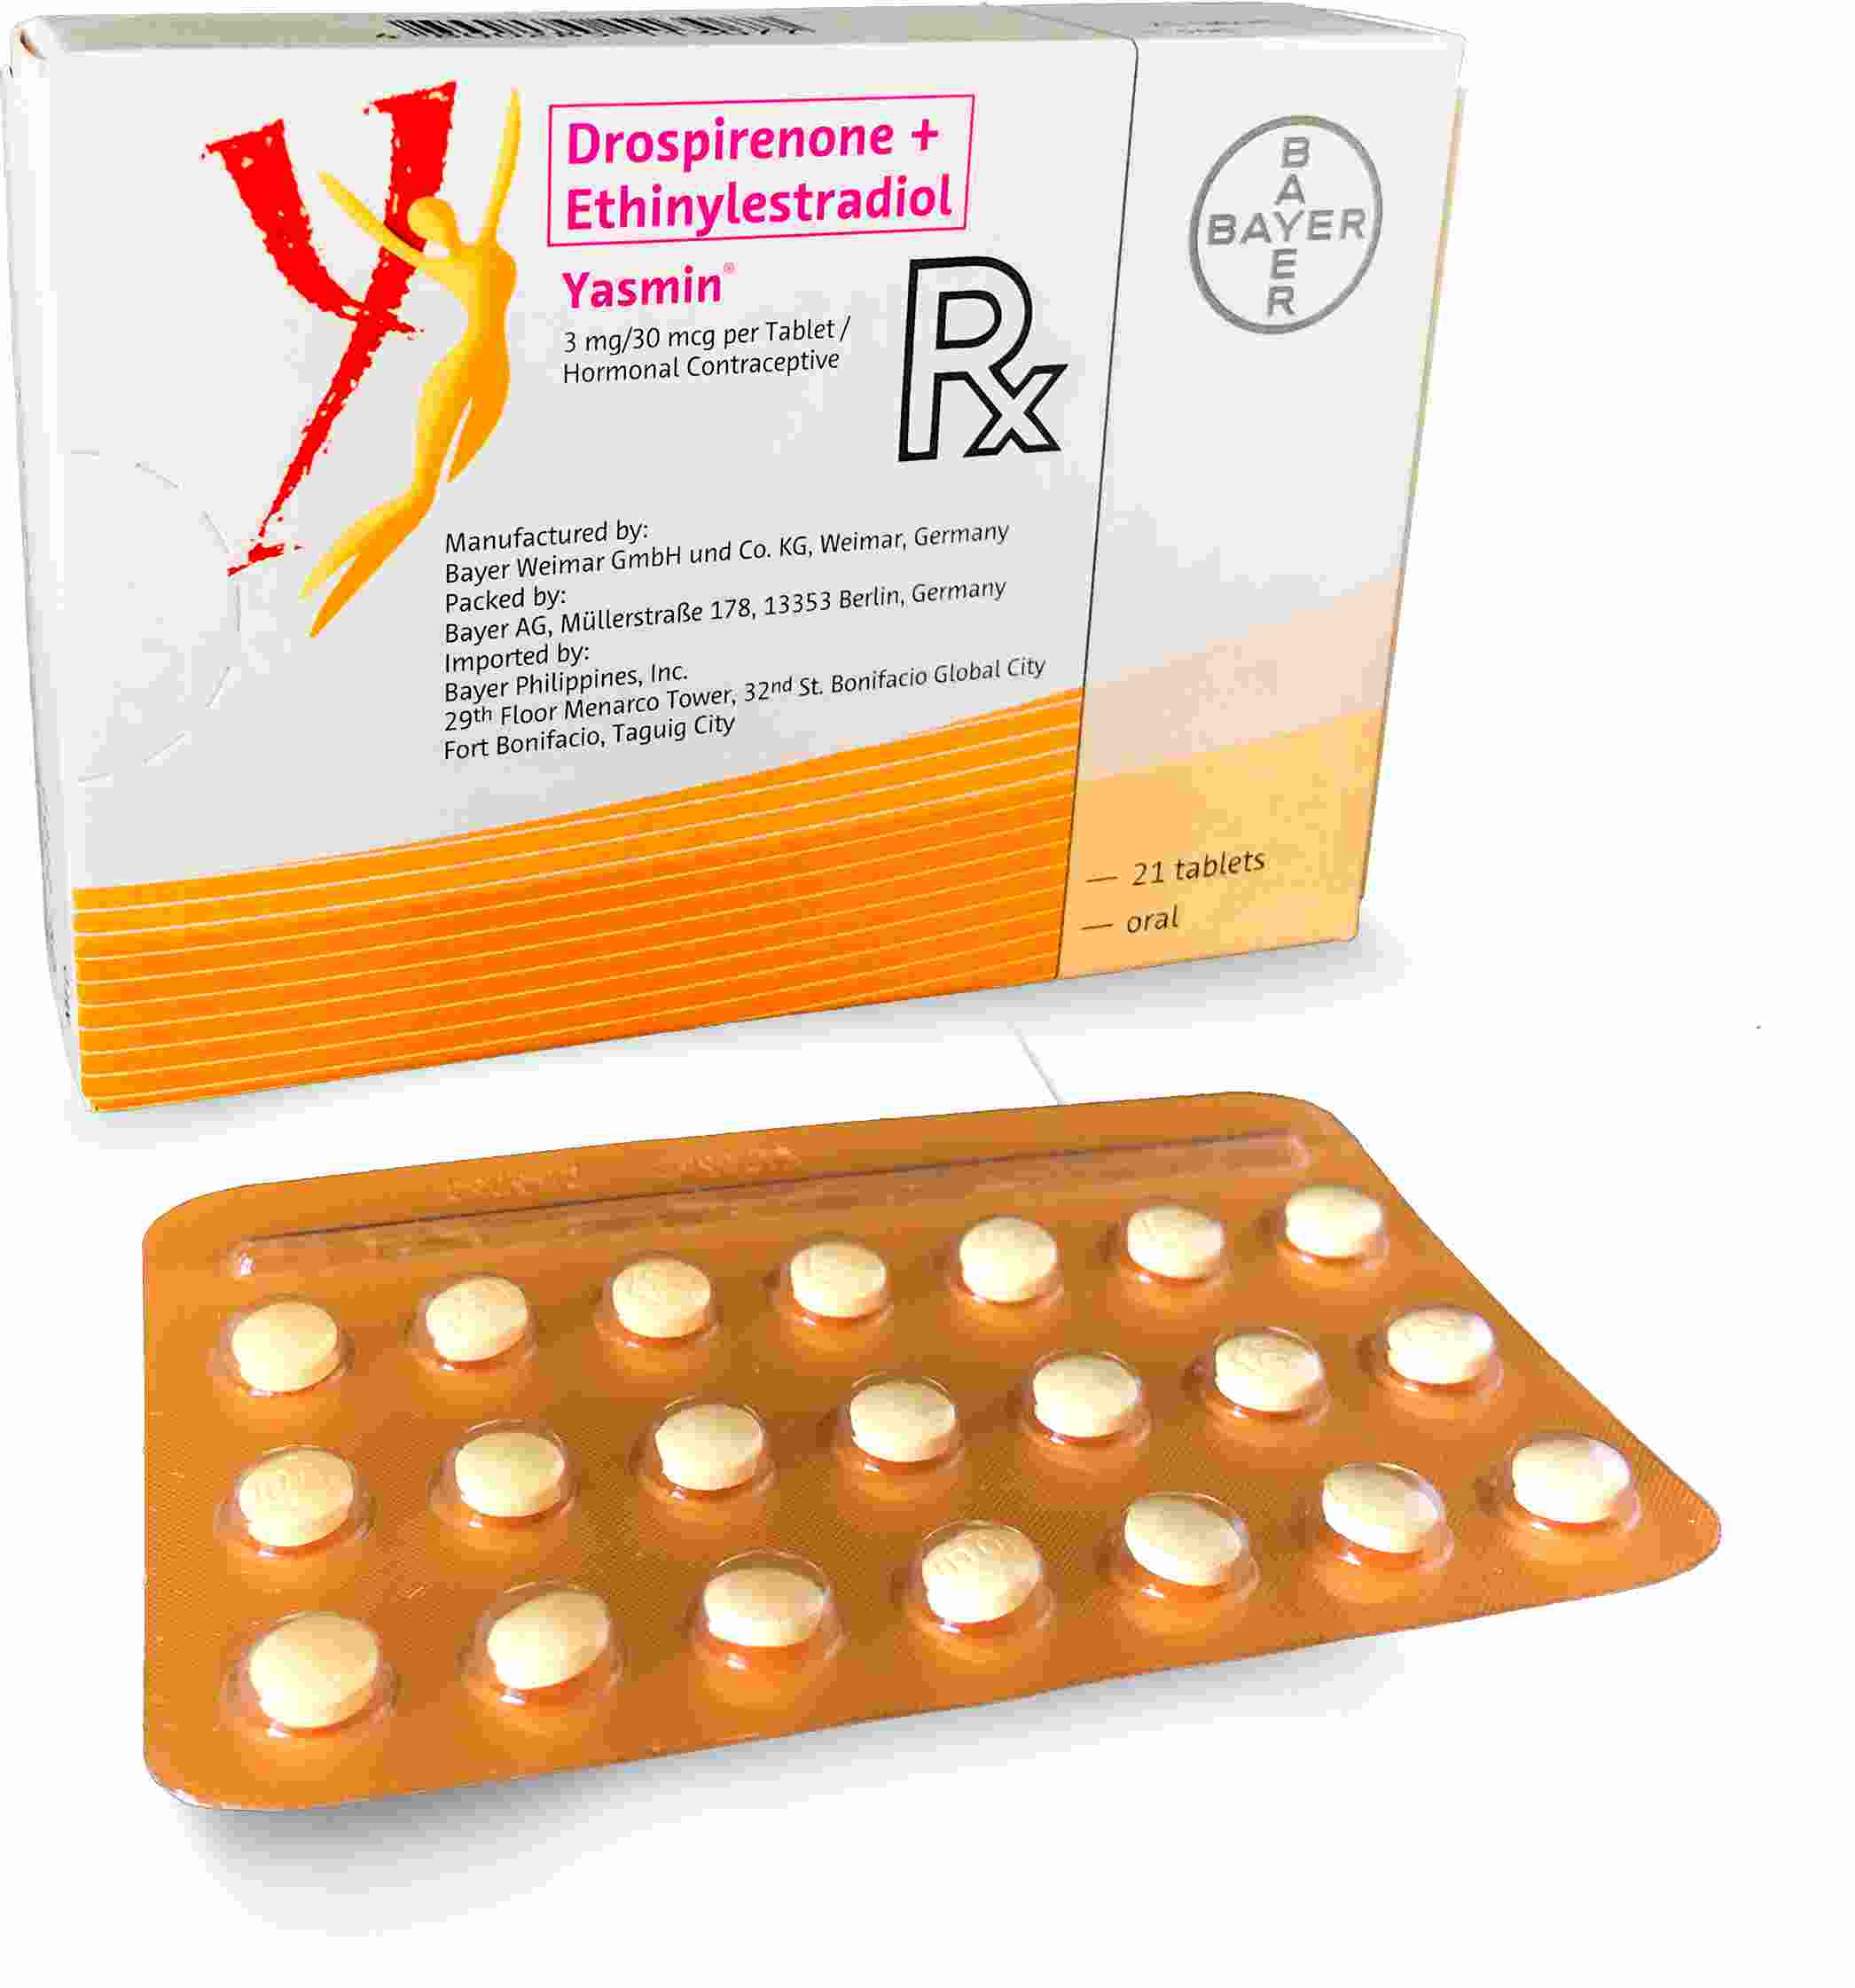 yasmin Drospirenone + Ethinylestradiol birth control pill